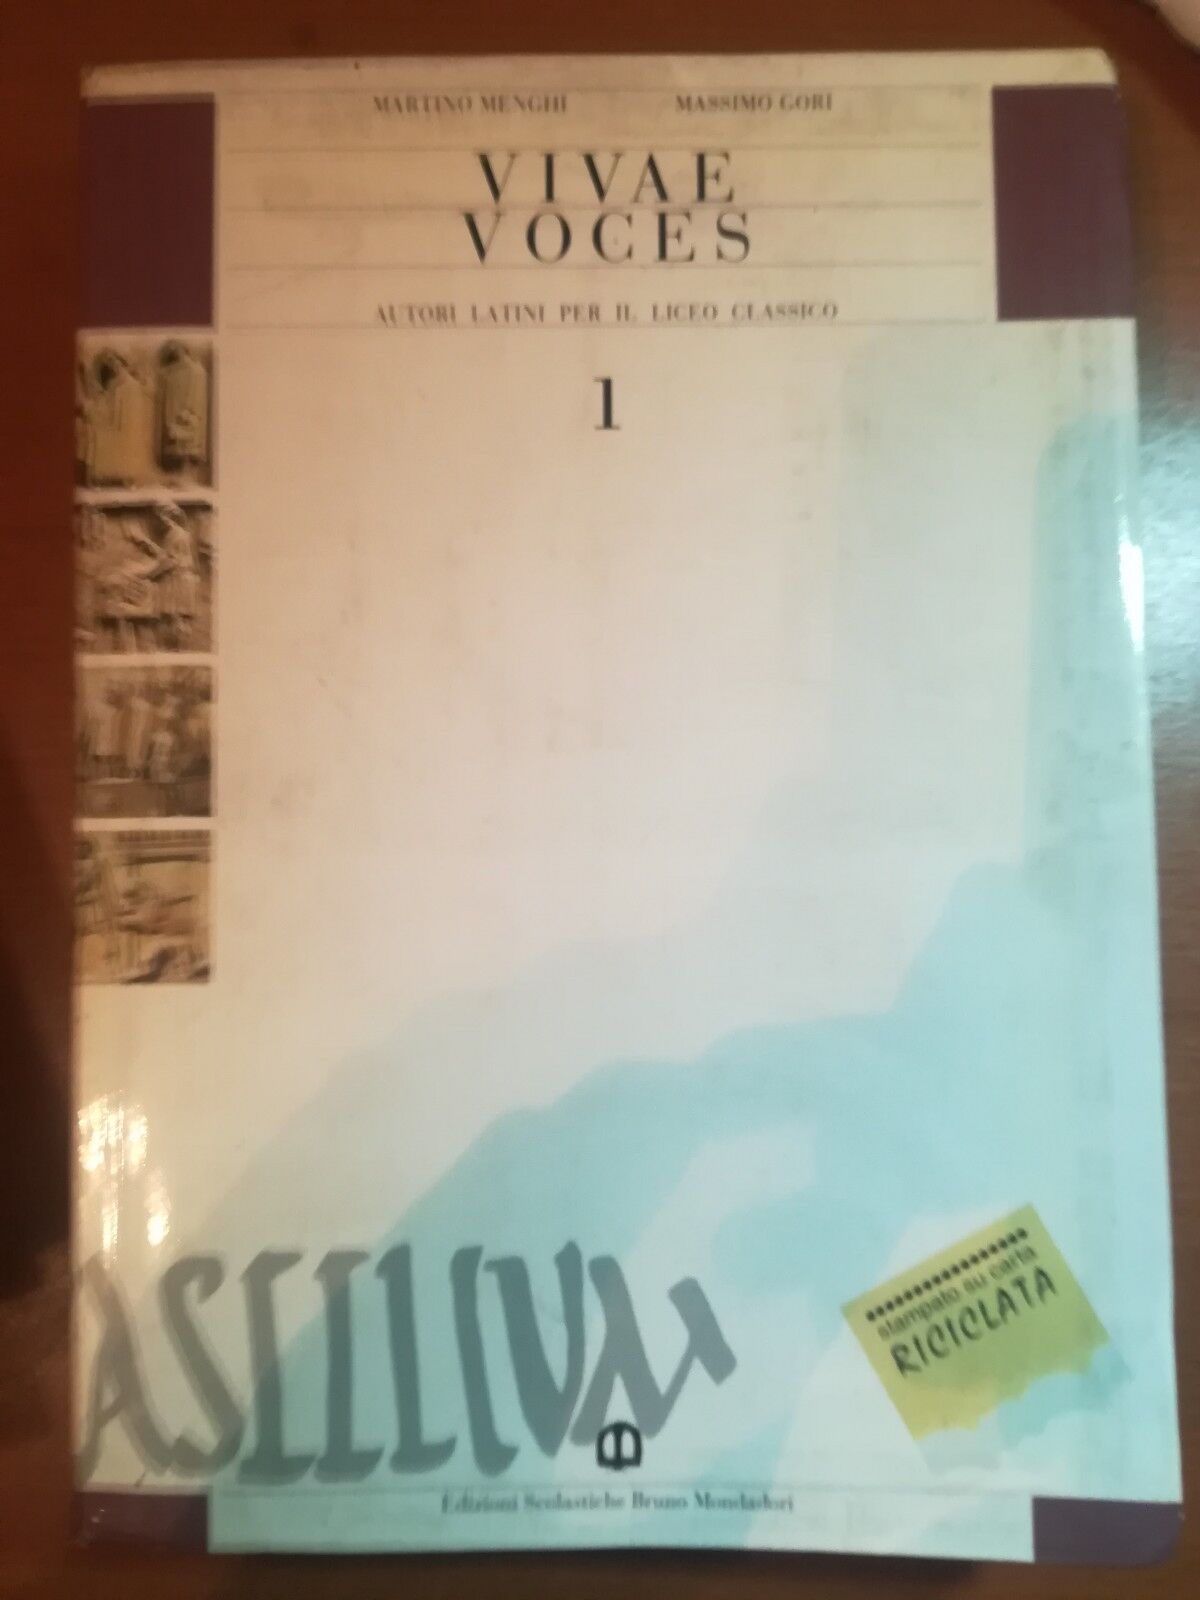 Vivae Voces - Martino Menghi , Massimo Gori - Mondadori - 1995 - M